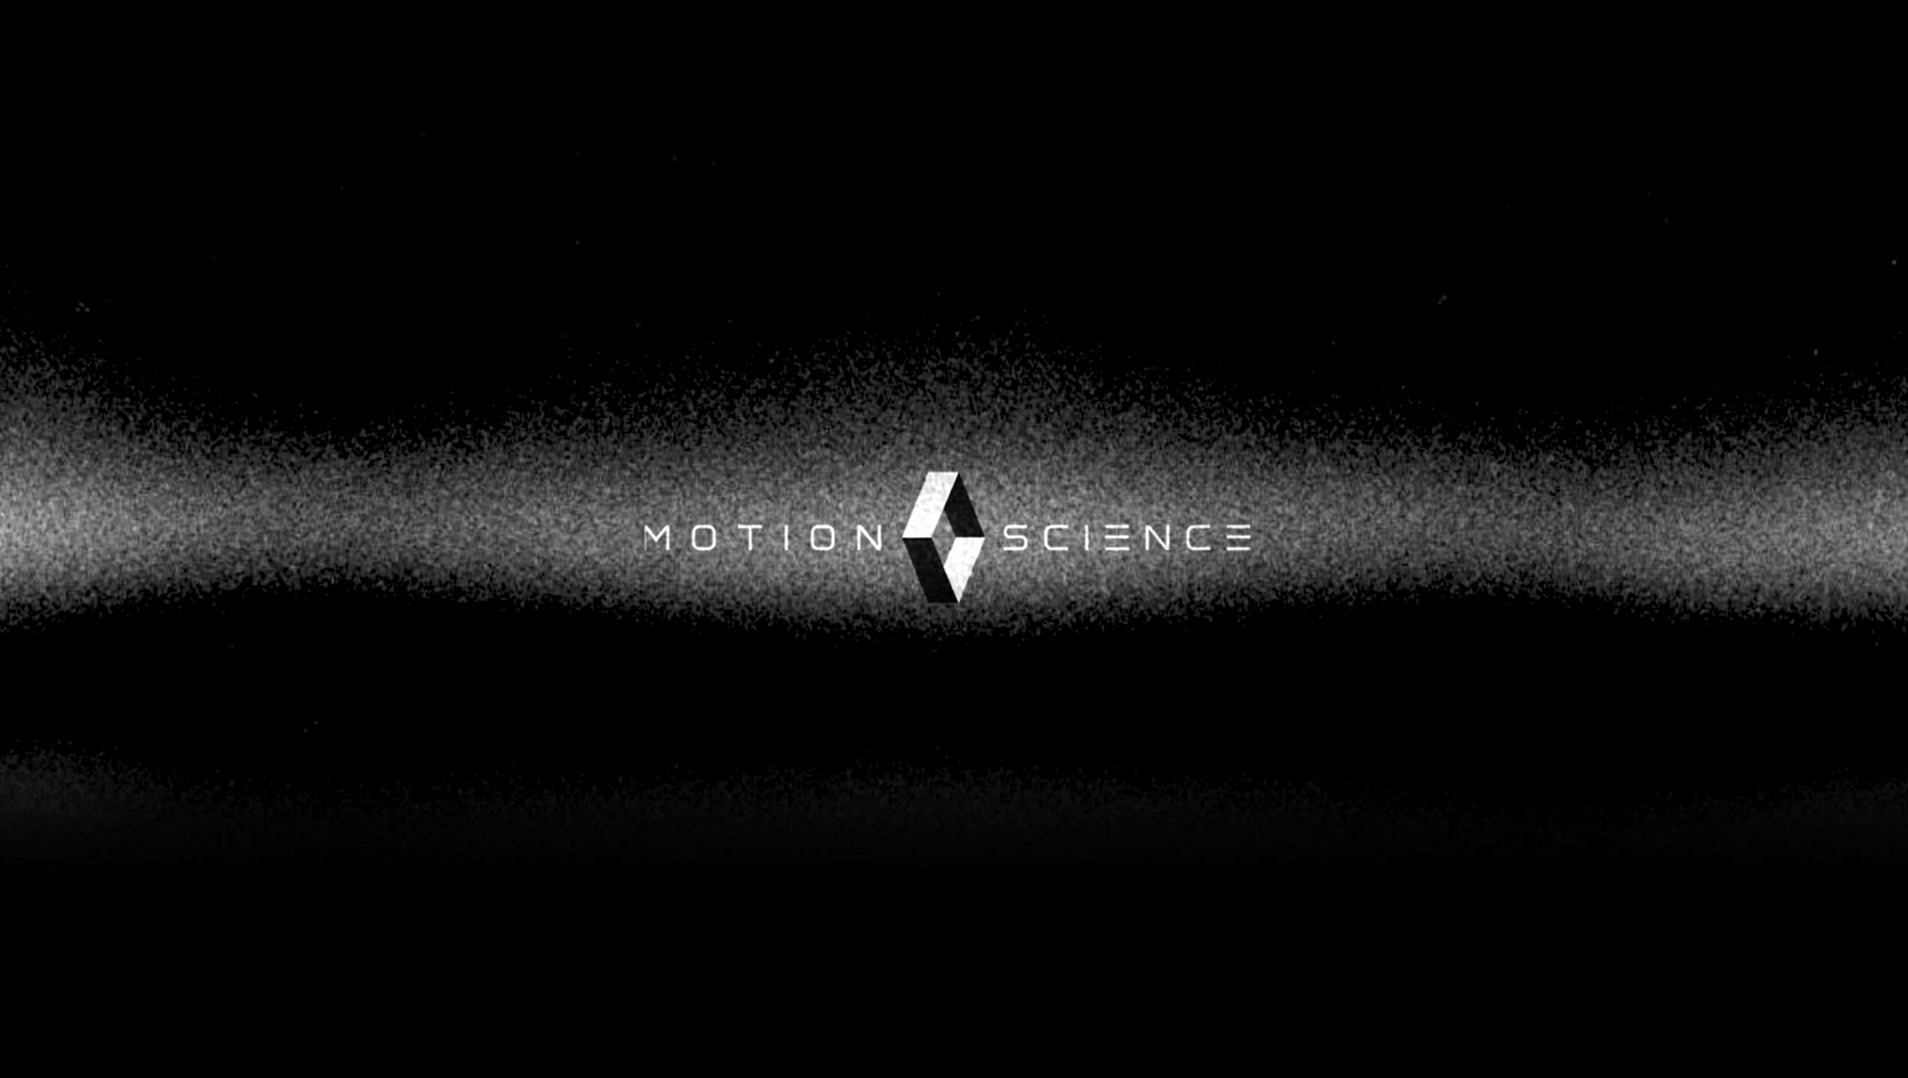 Motion Science 黑白运动墨迹砂砾纹理边缘框架转场过渡背景包 Grunge Elements & Textures（6171）图层云